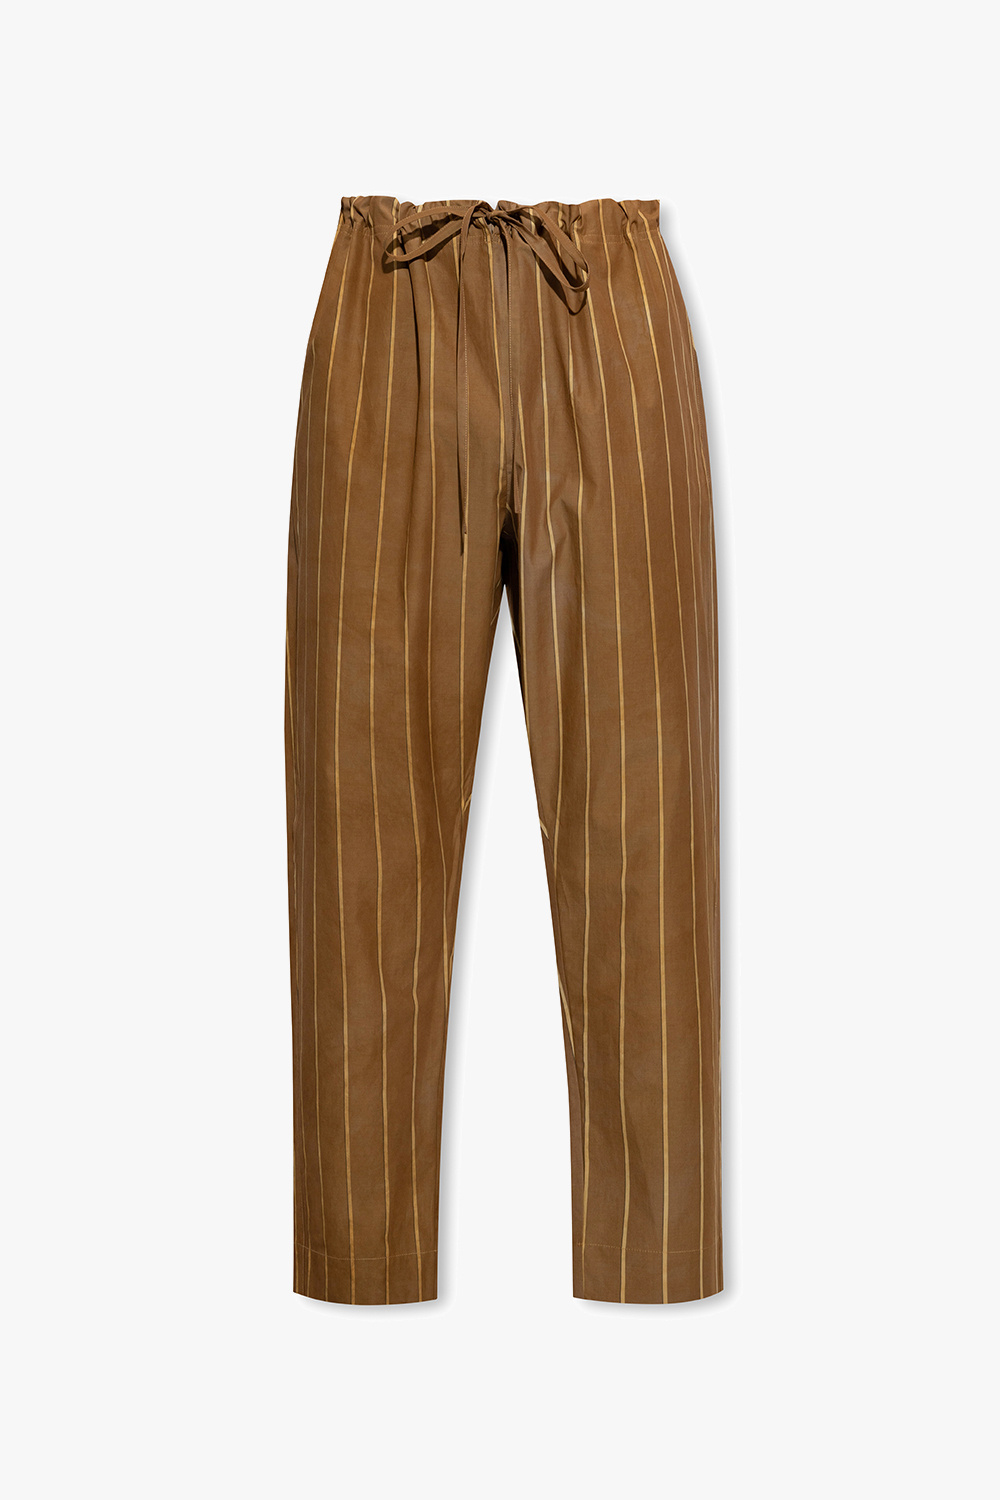 Nick Fouquet Pinstripe trousers